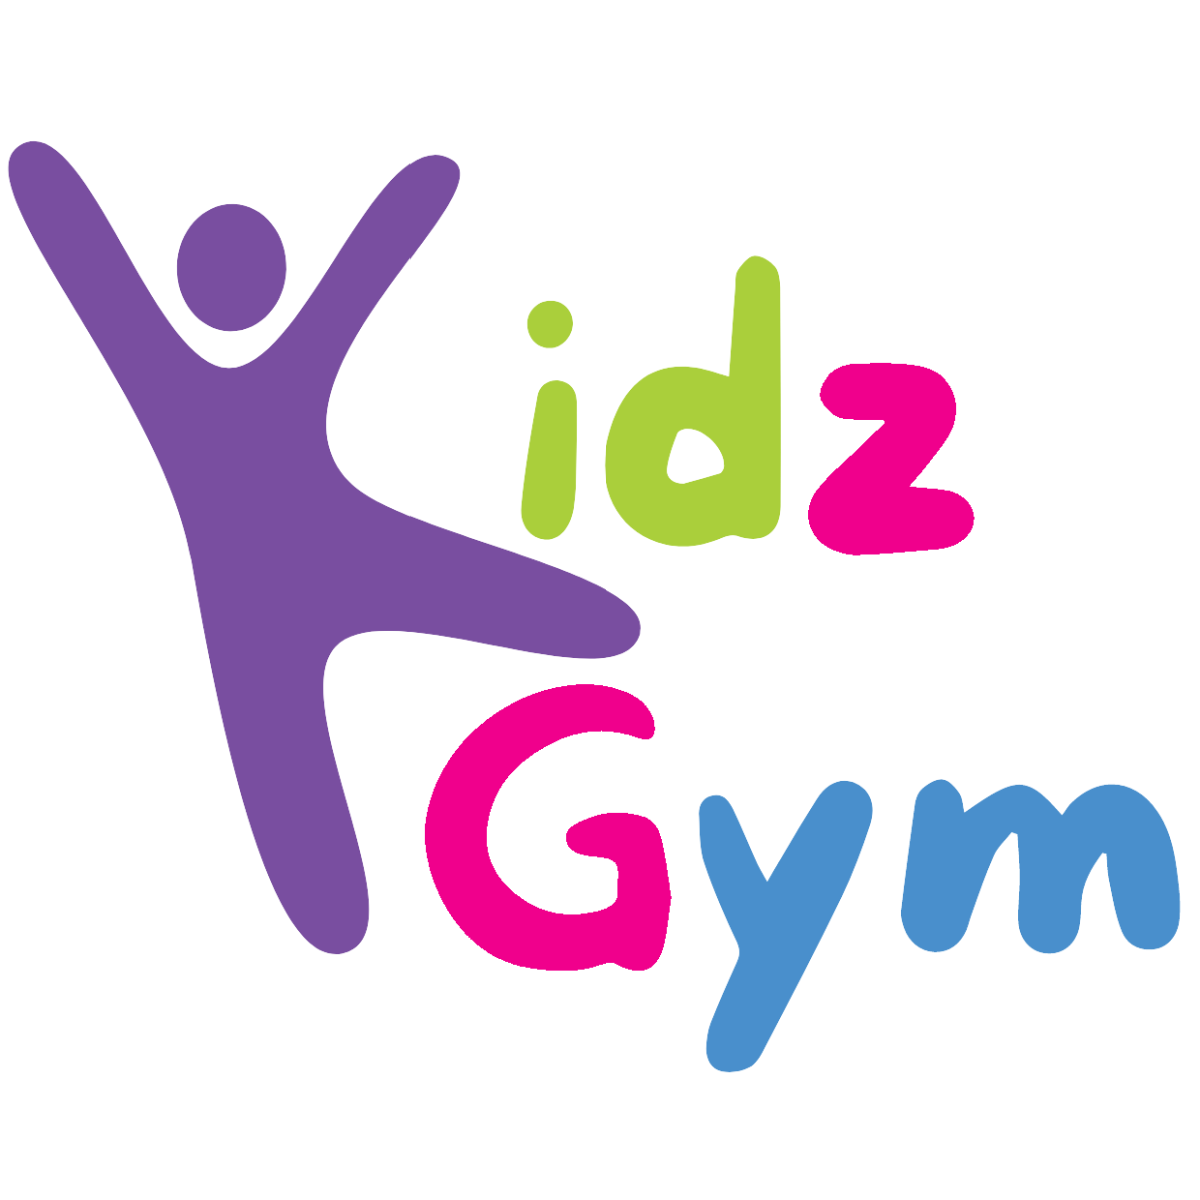 The Kidz Gym logo